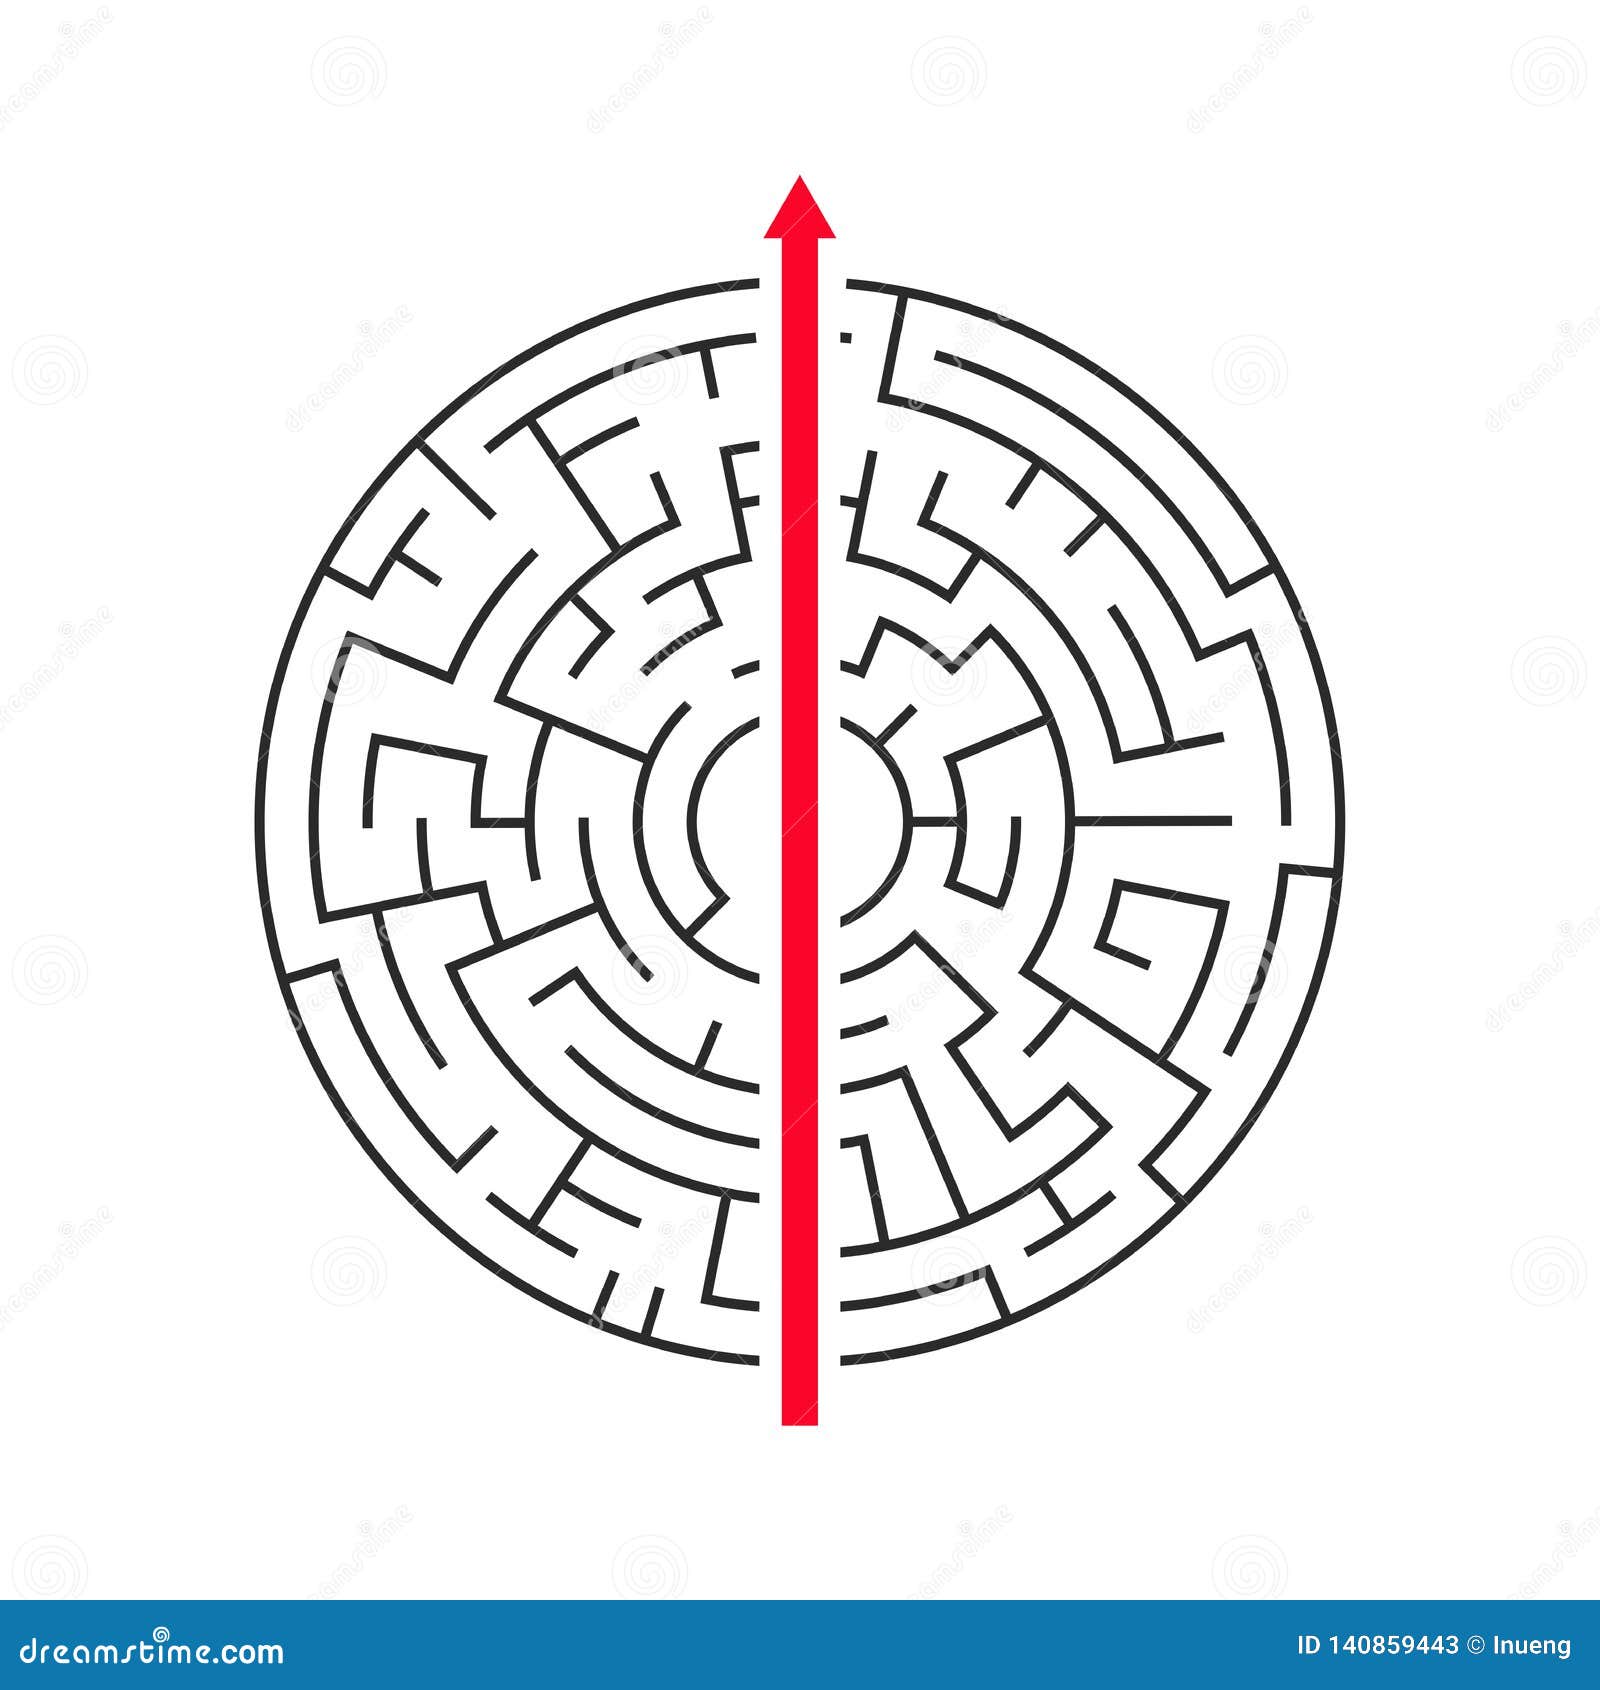 straight arrow going right through maze on white background.